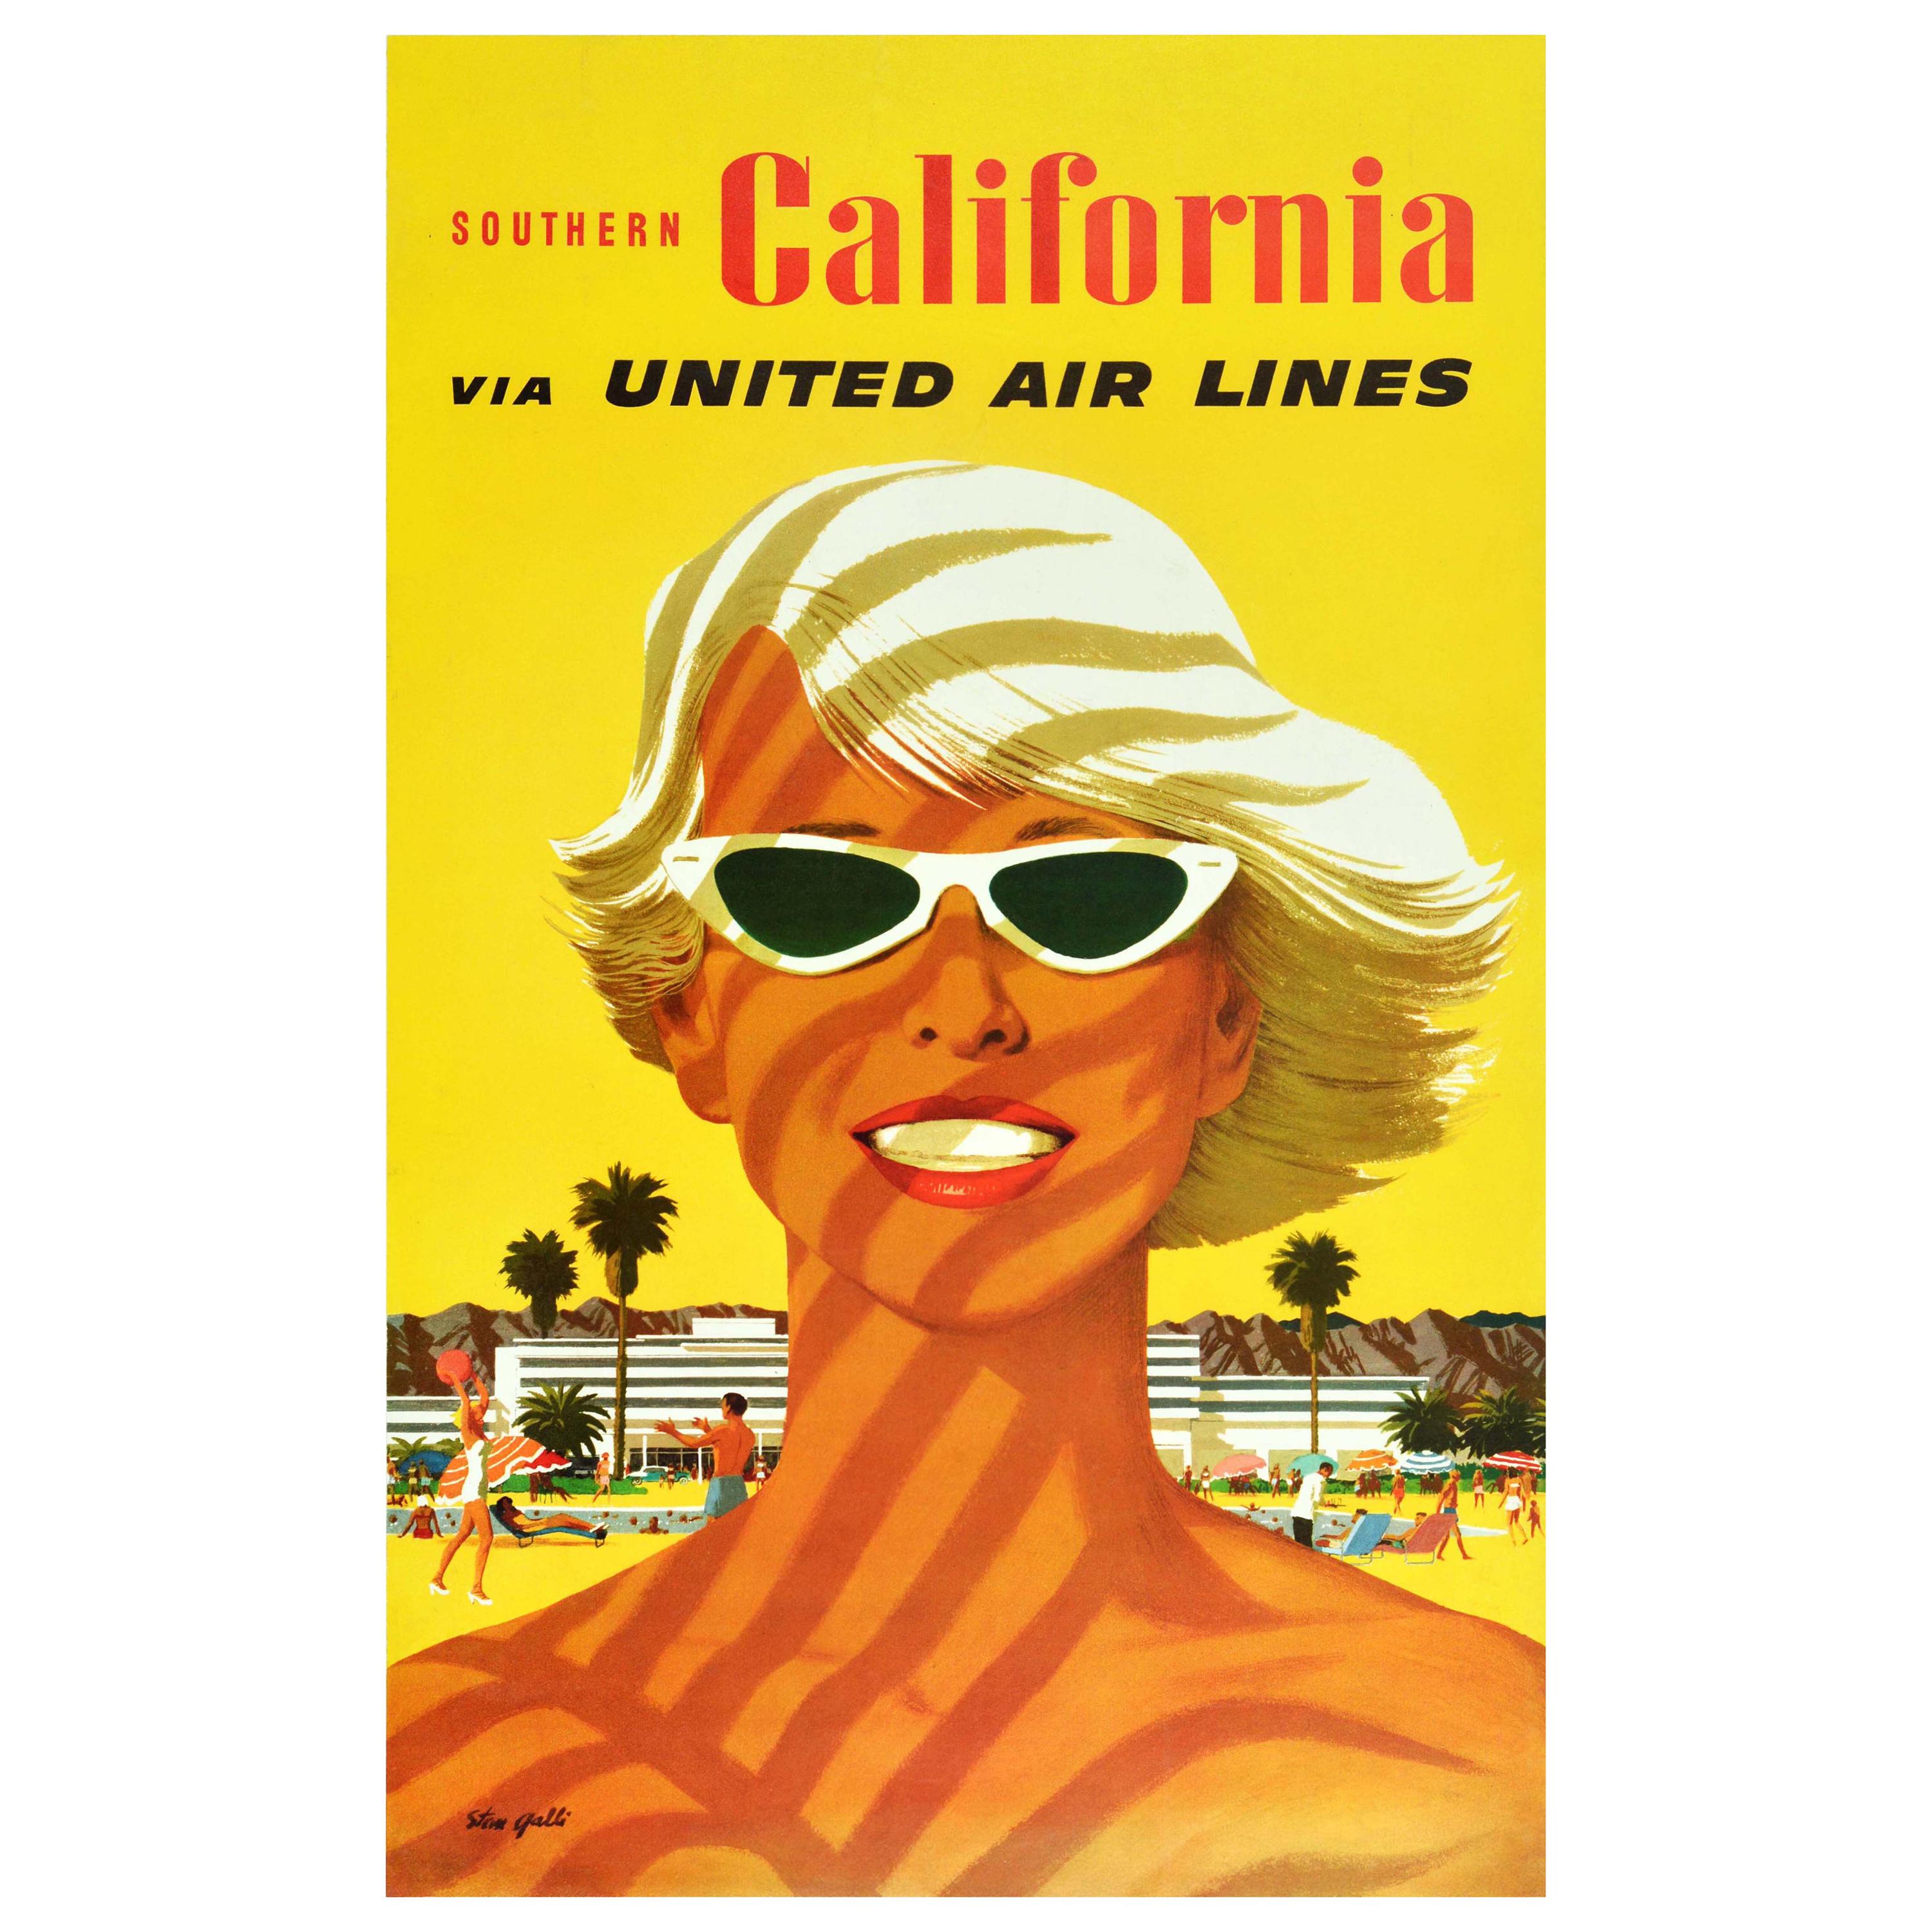 TRAVEL UNITED AIRLINE SAN FRANCISCO USA CALIFORNIA TRAM VINTAGE POSTER 2550PY